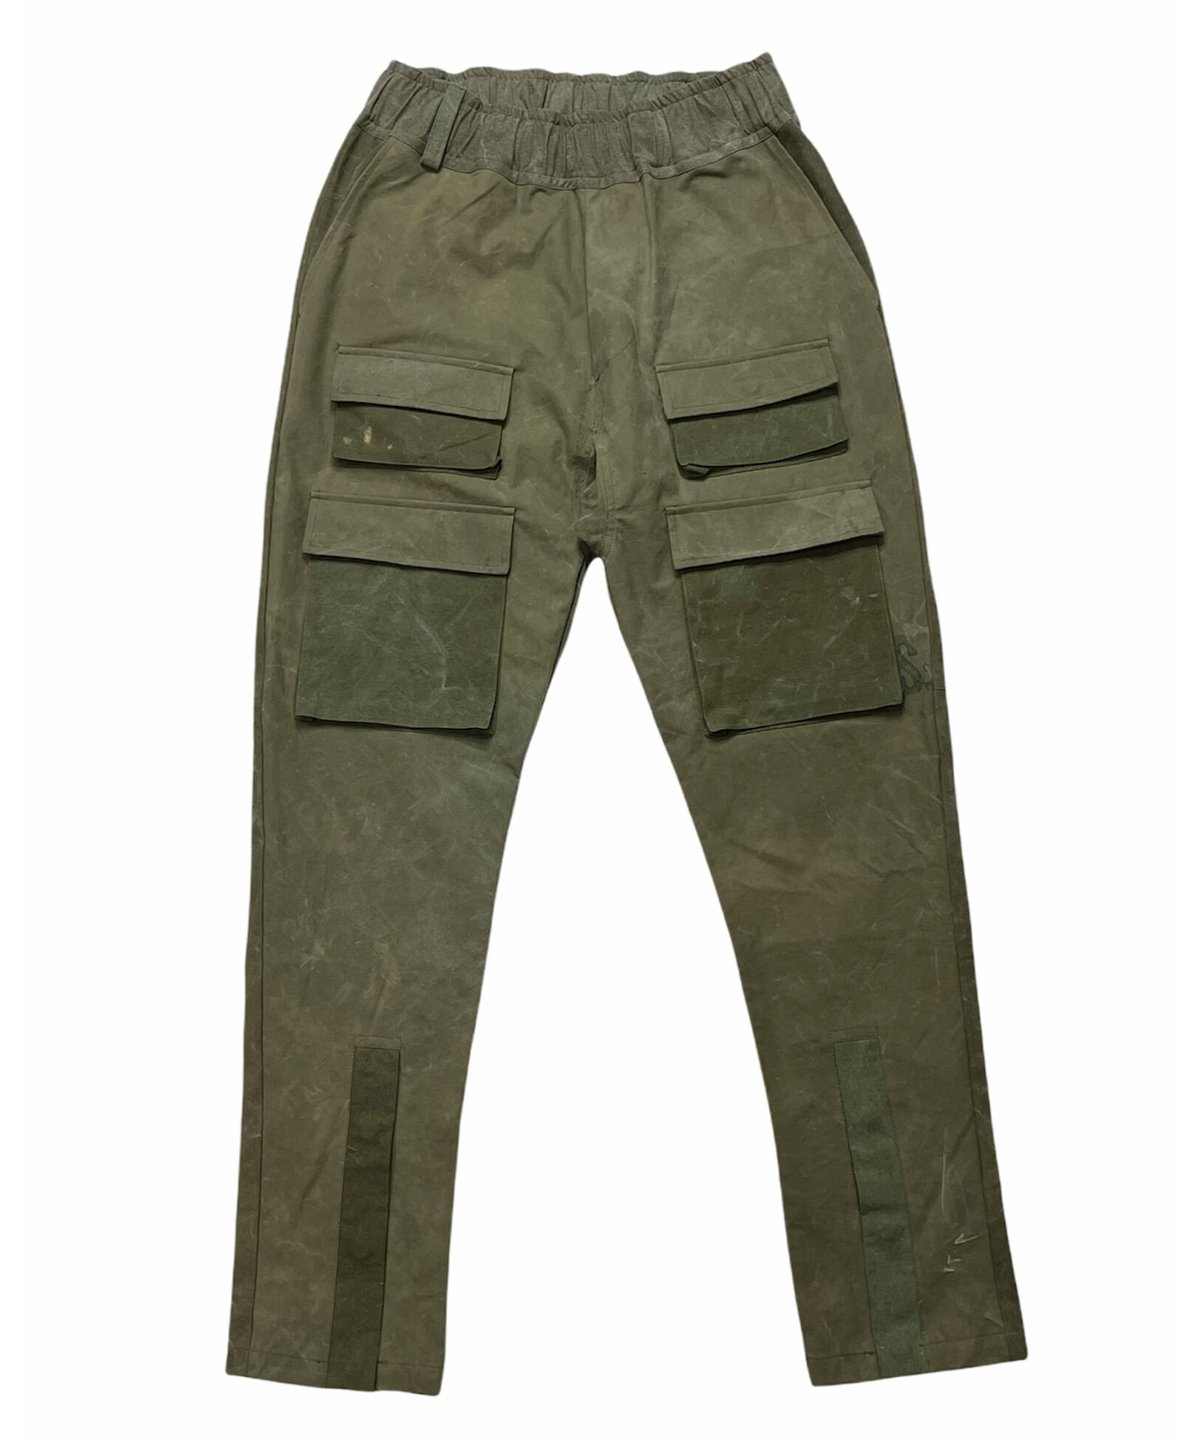 LAIDBACK / cargo track pants vintage U.S army t...